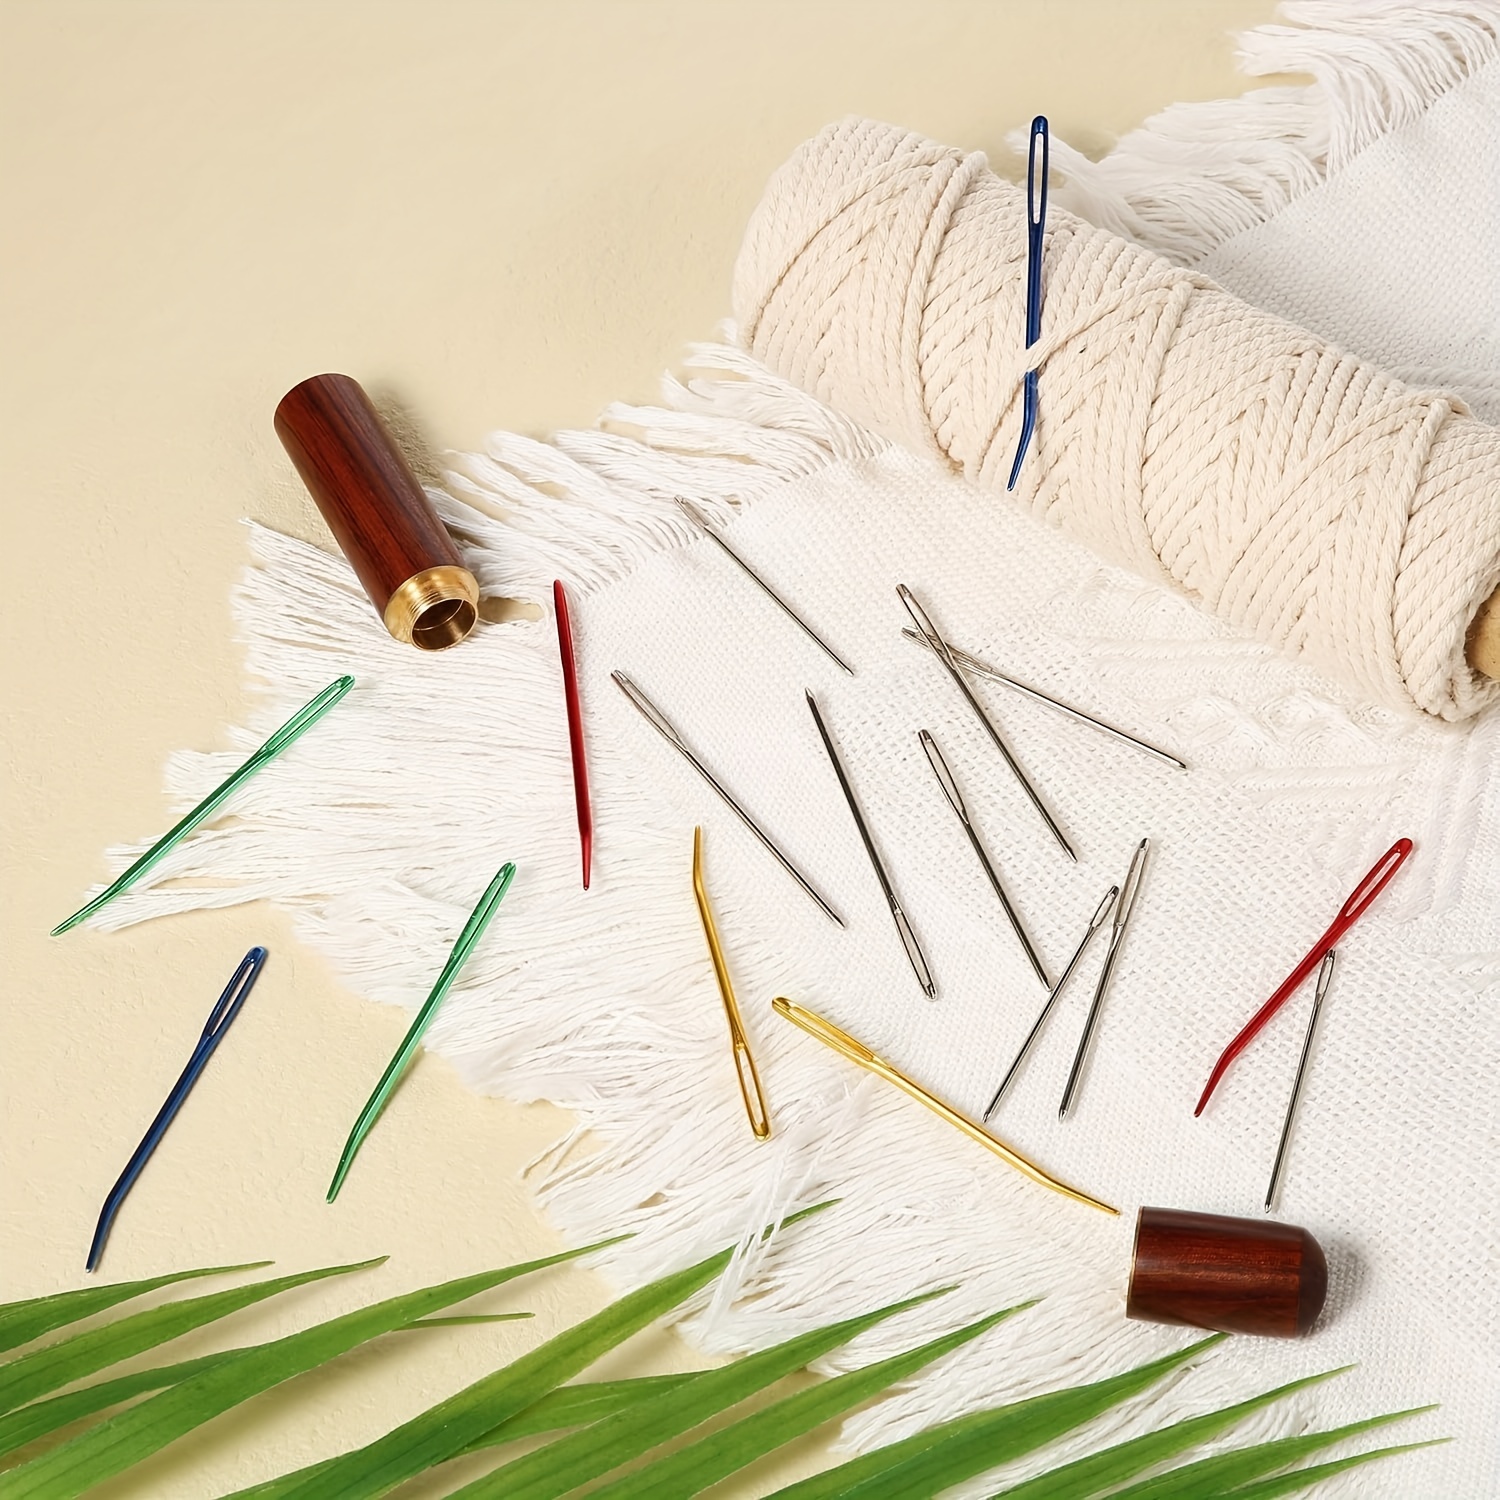 Large-Eye Blunt Needles, Stainless Steel Yarn Knitting Needles, Sewing  Needles